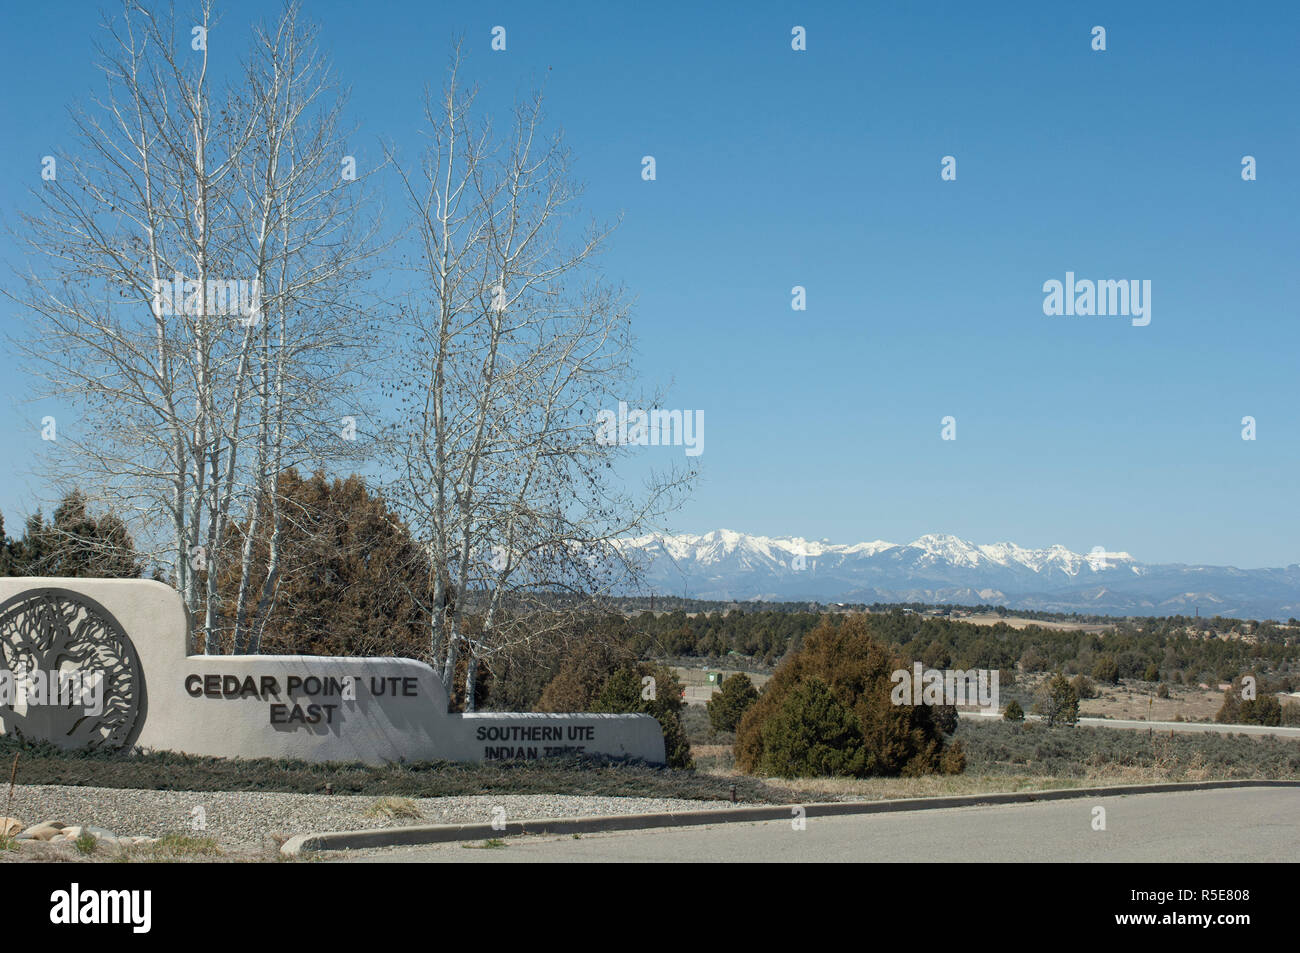 Wohngebiet, südlichen Ute Reservierung, Ignacio, Colorado. Digitale Fotografie Stockfoto